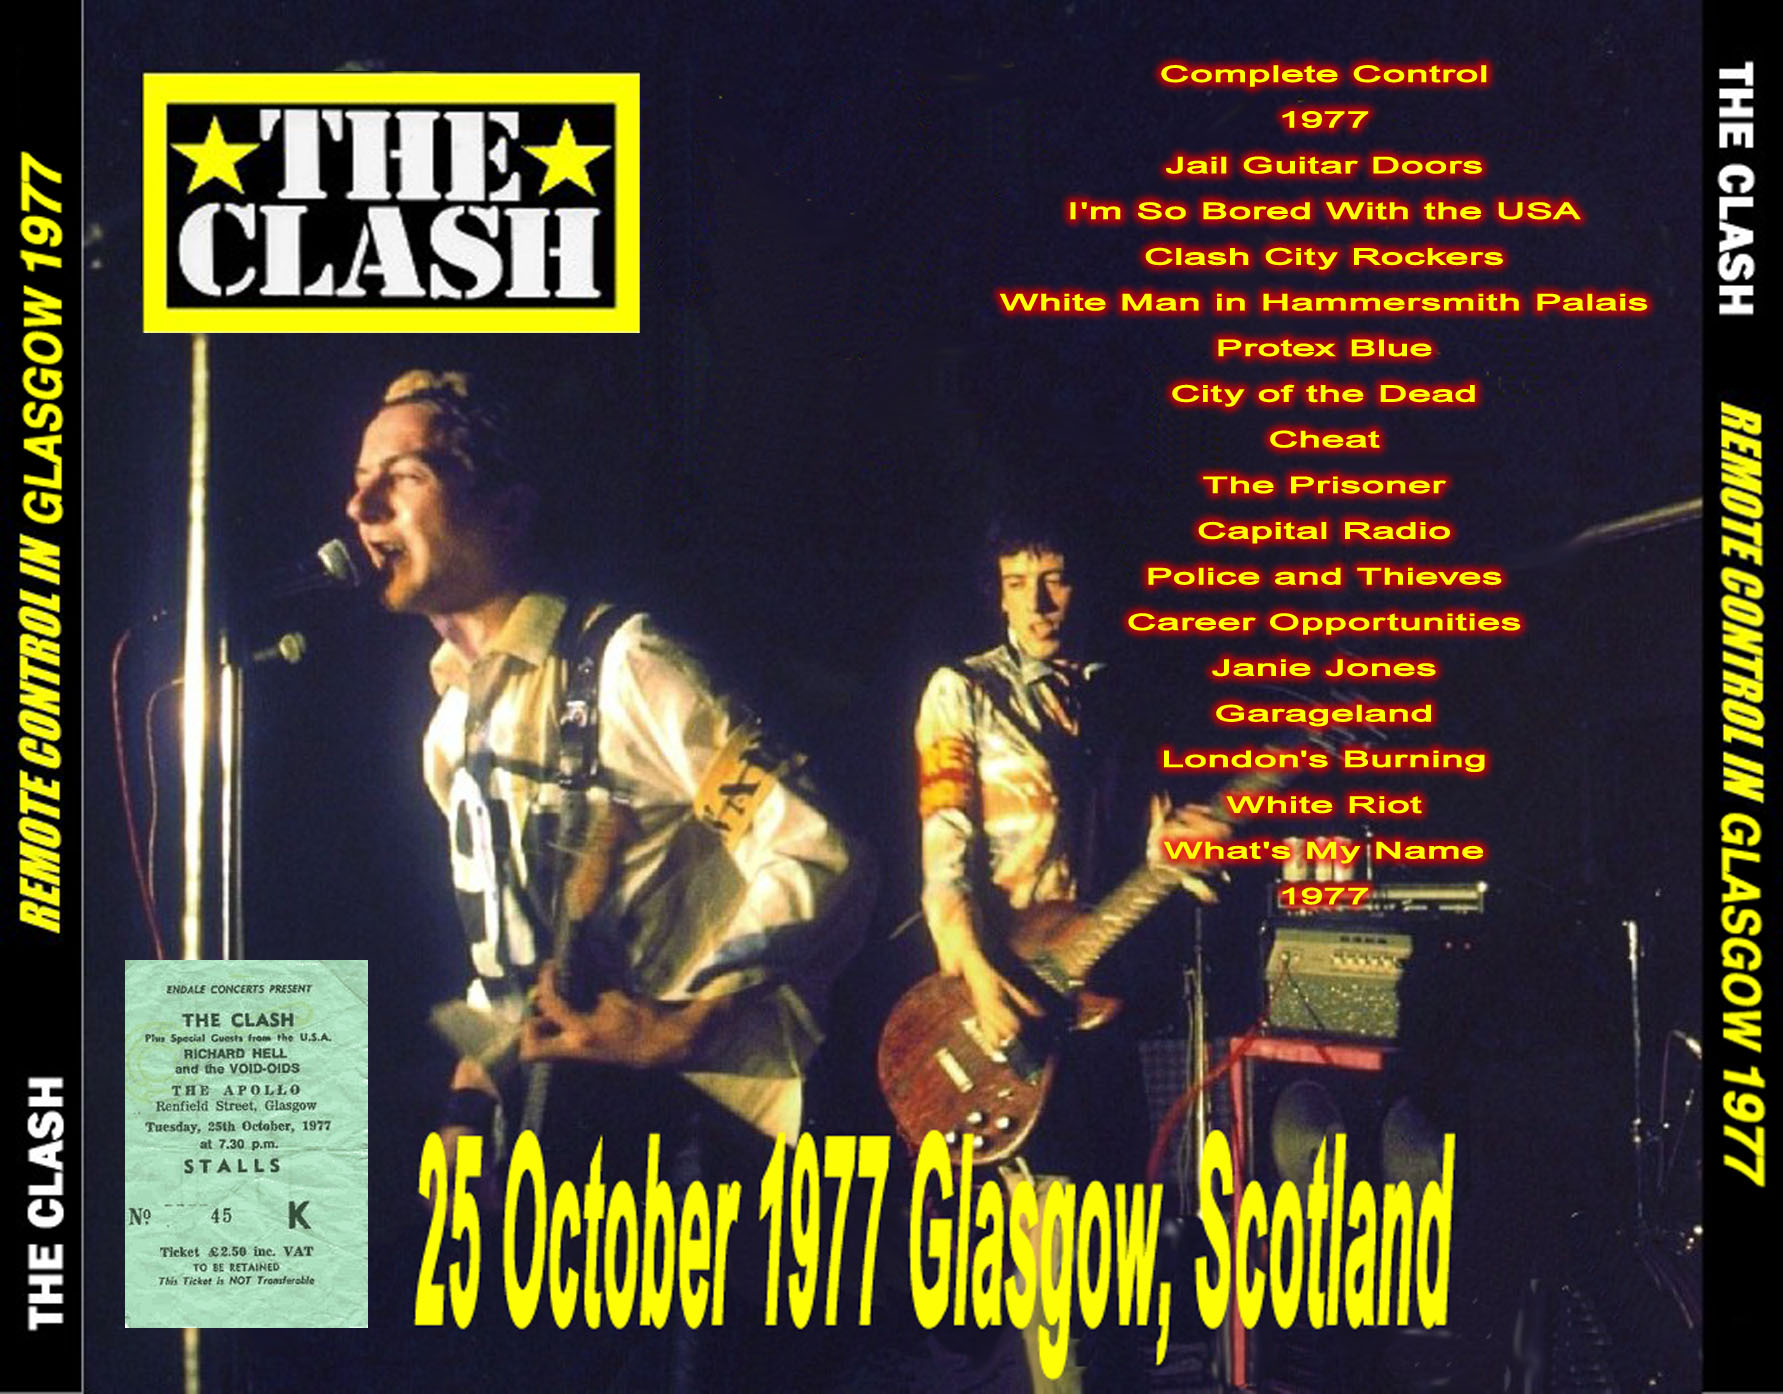 Clash1977-10-25TheApolloGlasgowScotland (1).jpg